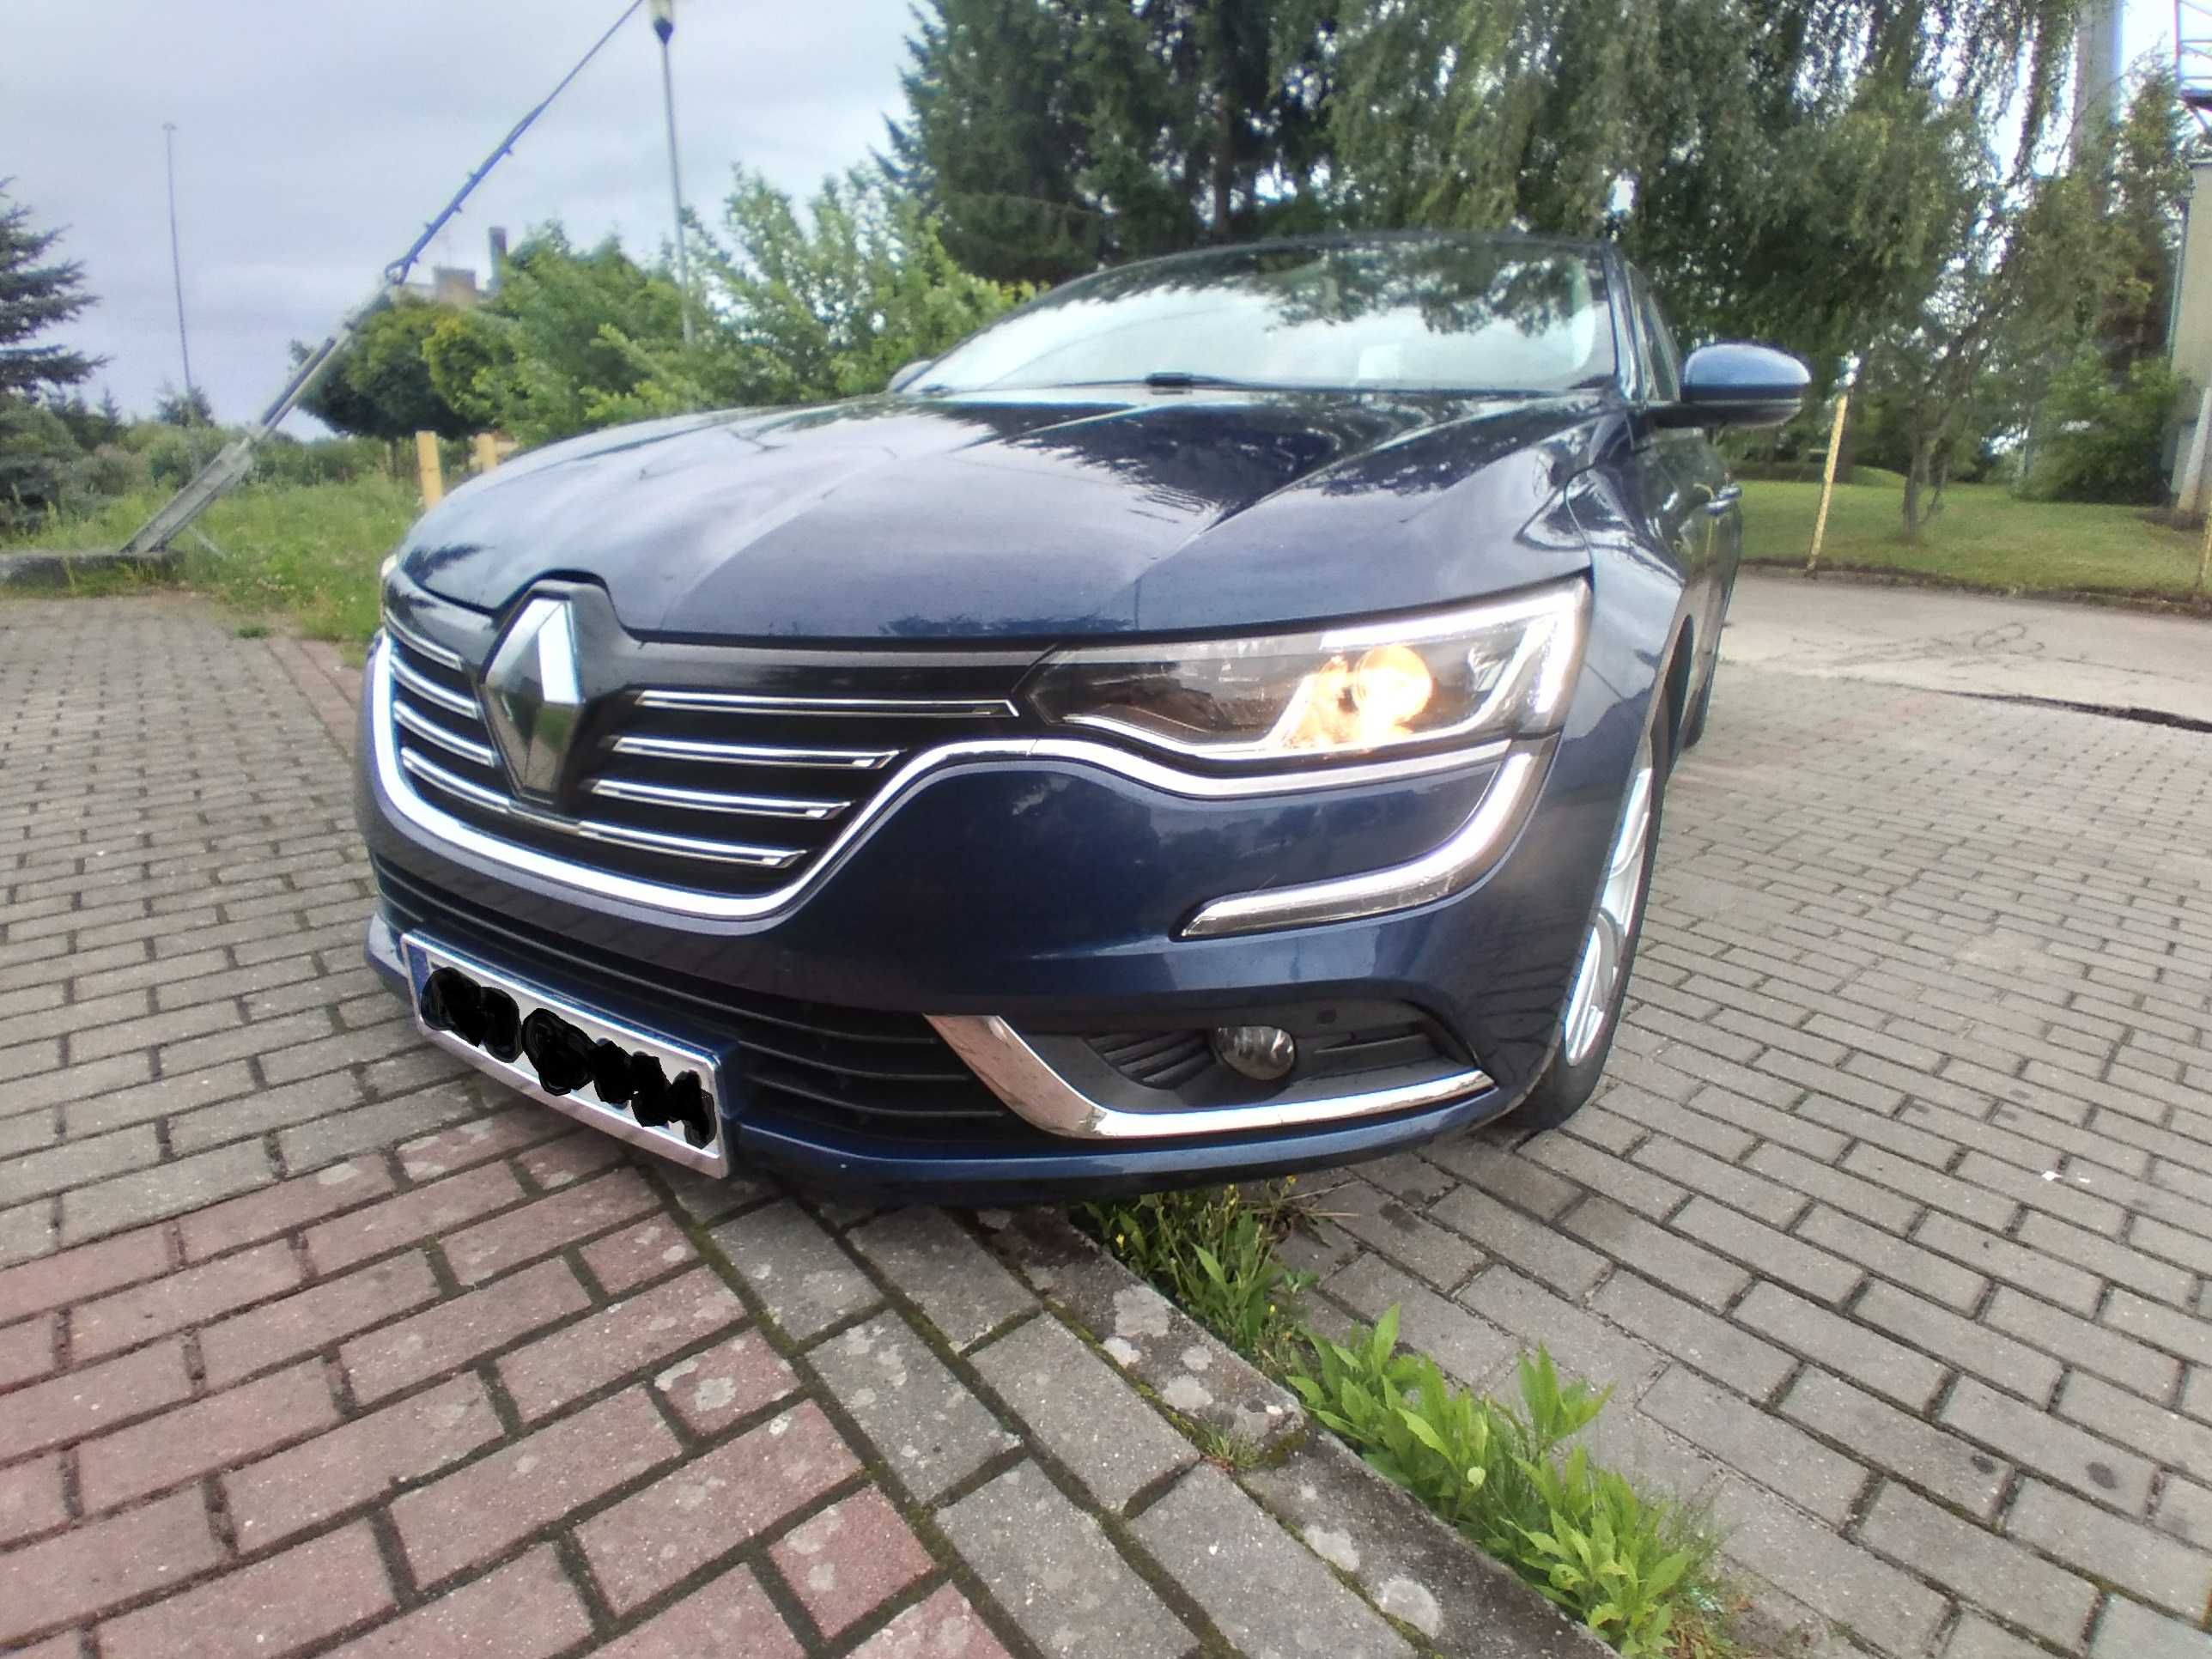 Renault Talisman 1.6 Dci- Polecam.